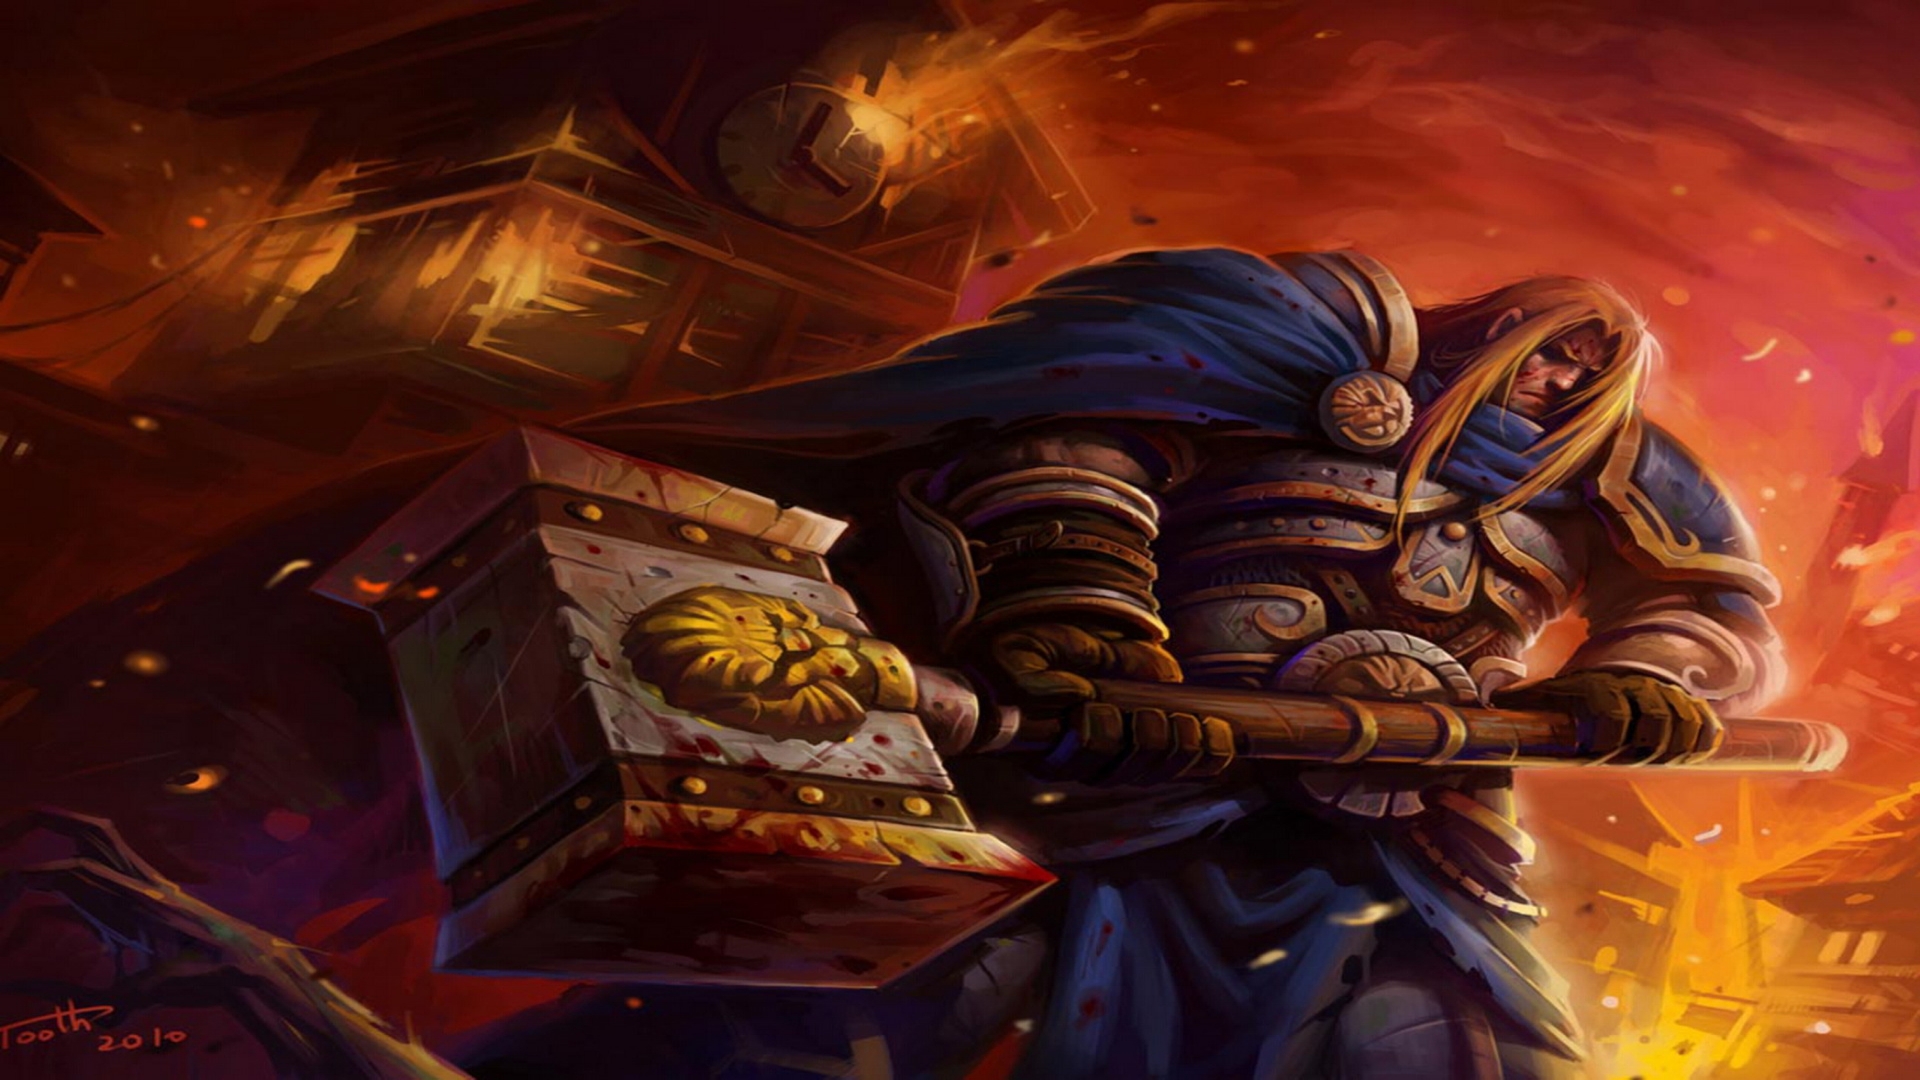 Games Wallpaper Wow World Of Warcraft